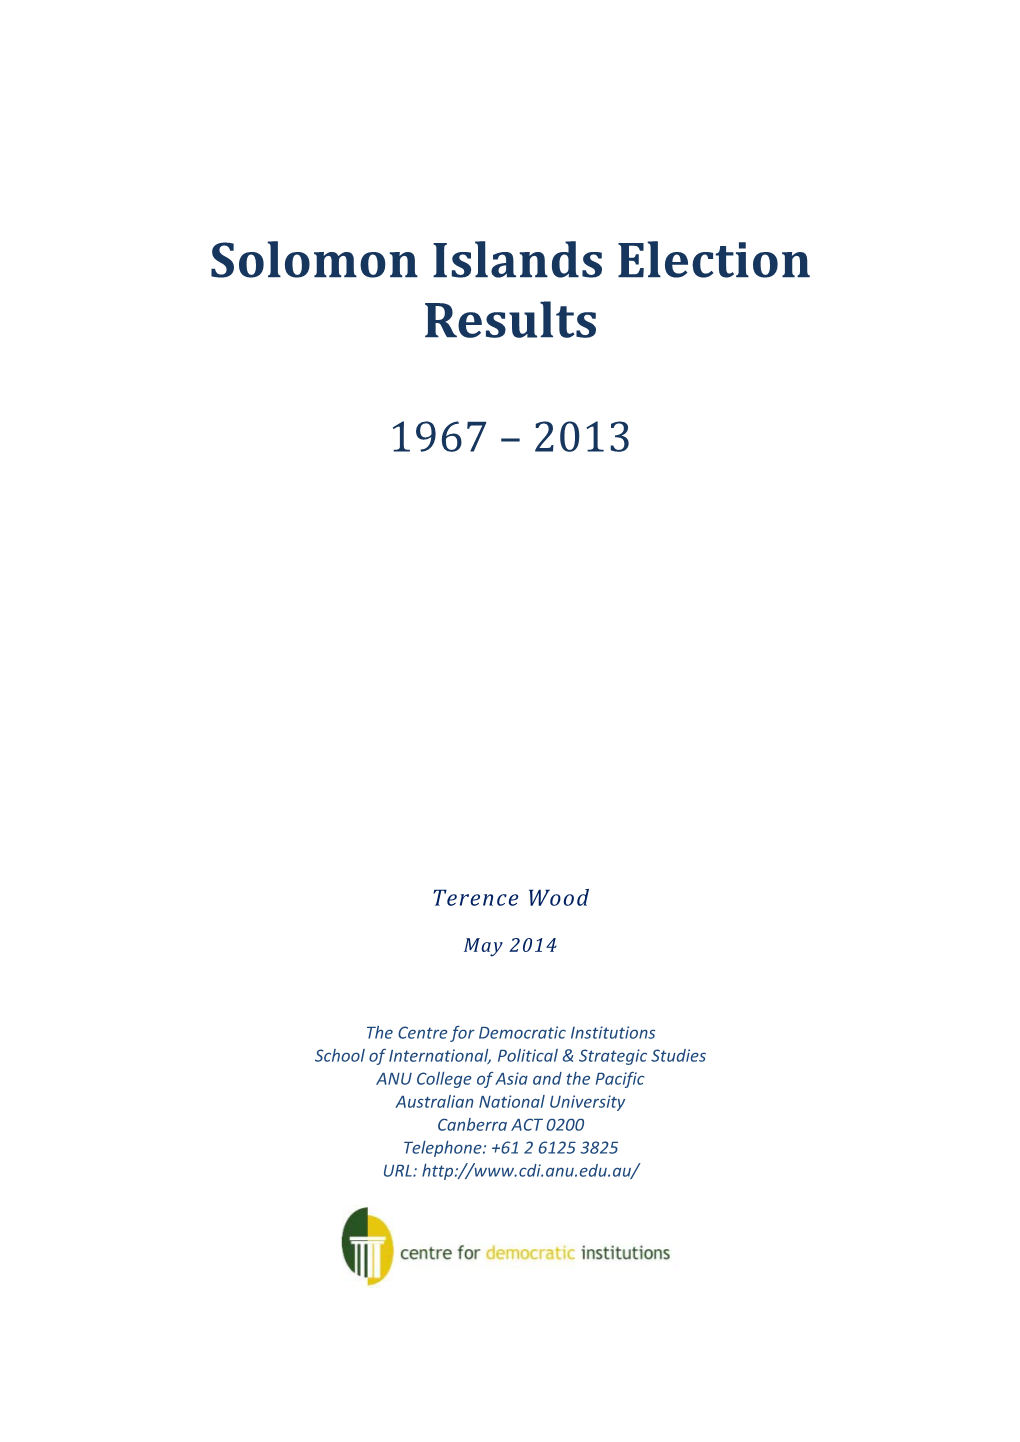 Solomon Islands Election Results DocsLib